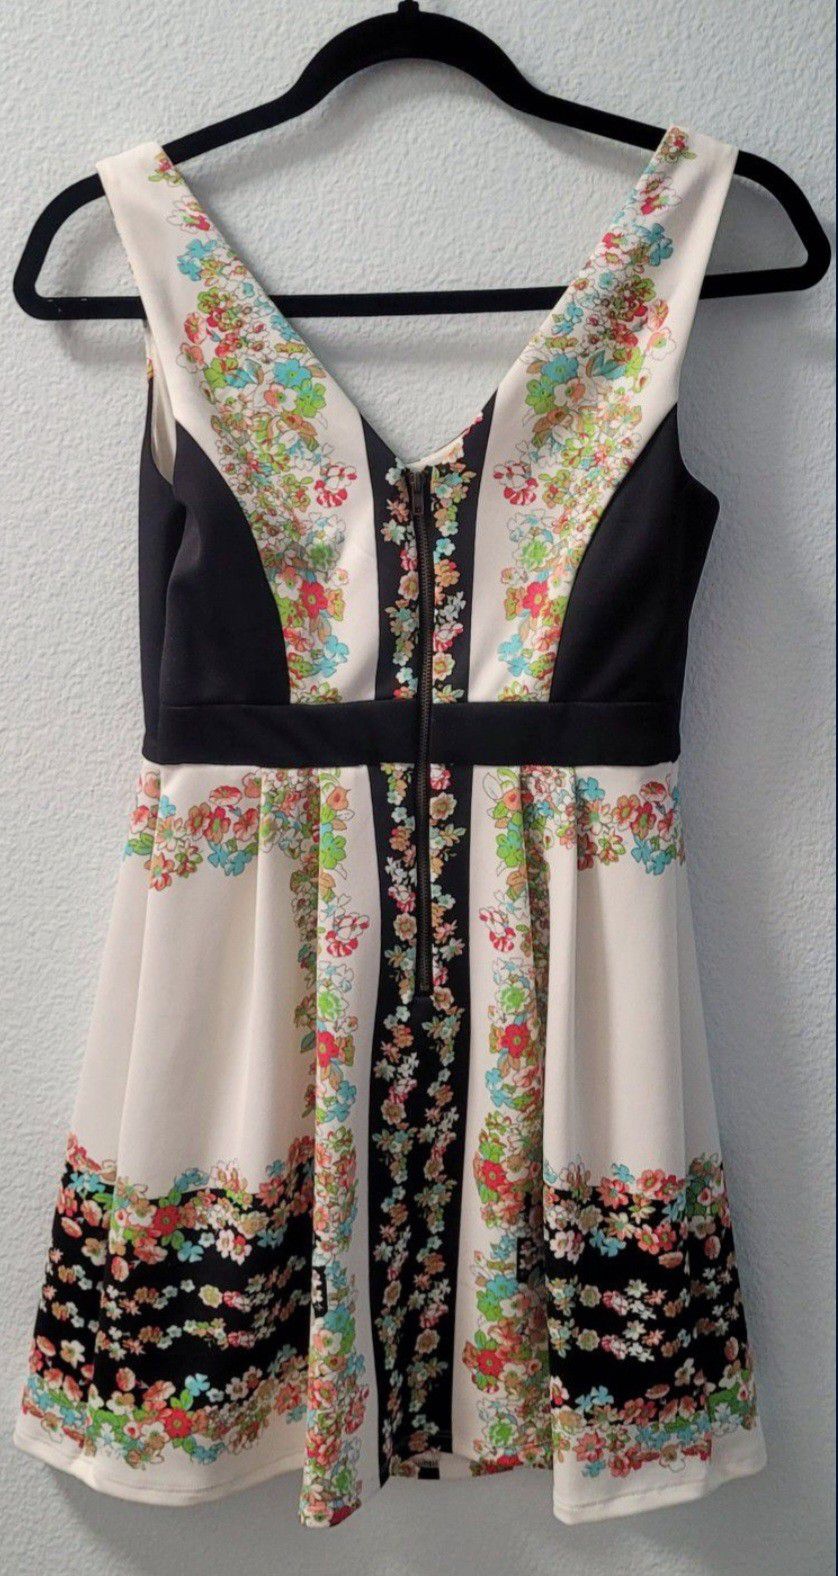 Retro 70's Flower Dress - Made For Impulse Fashion Week